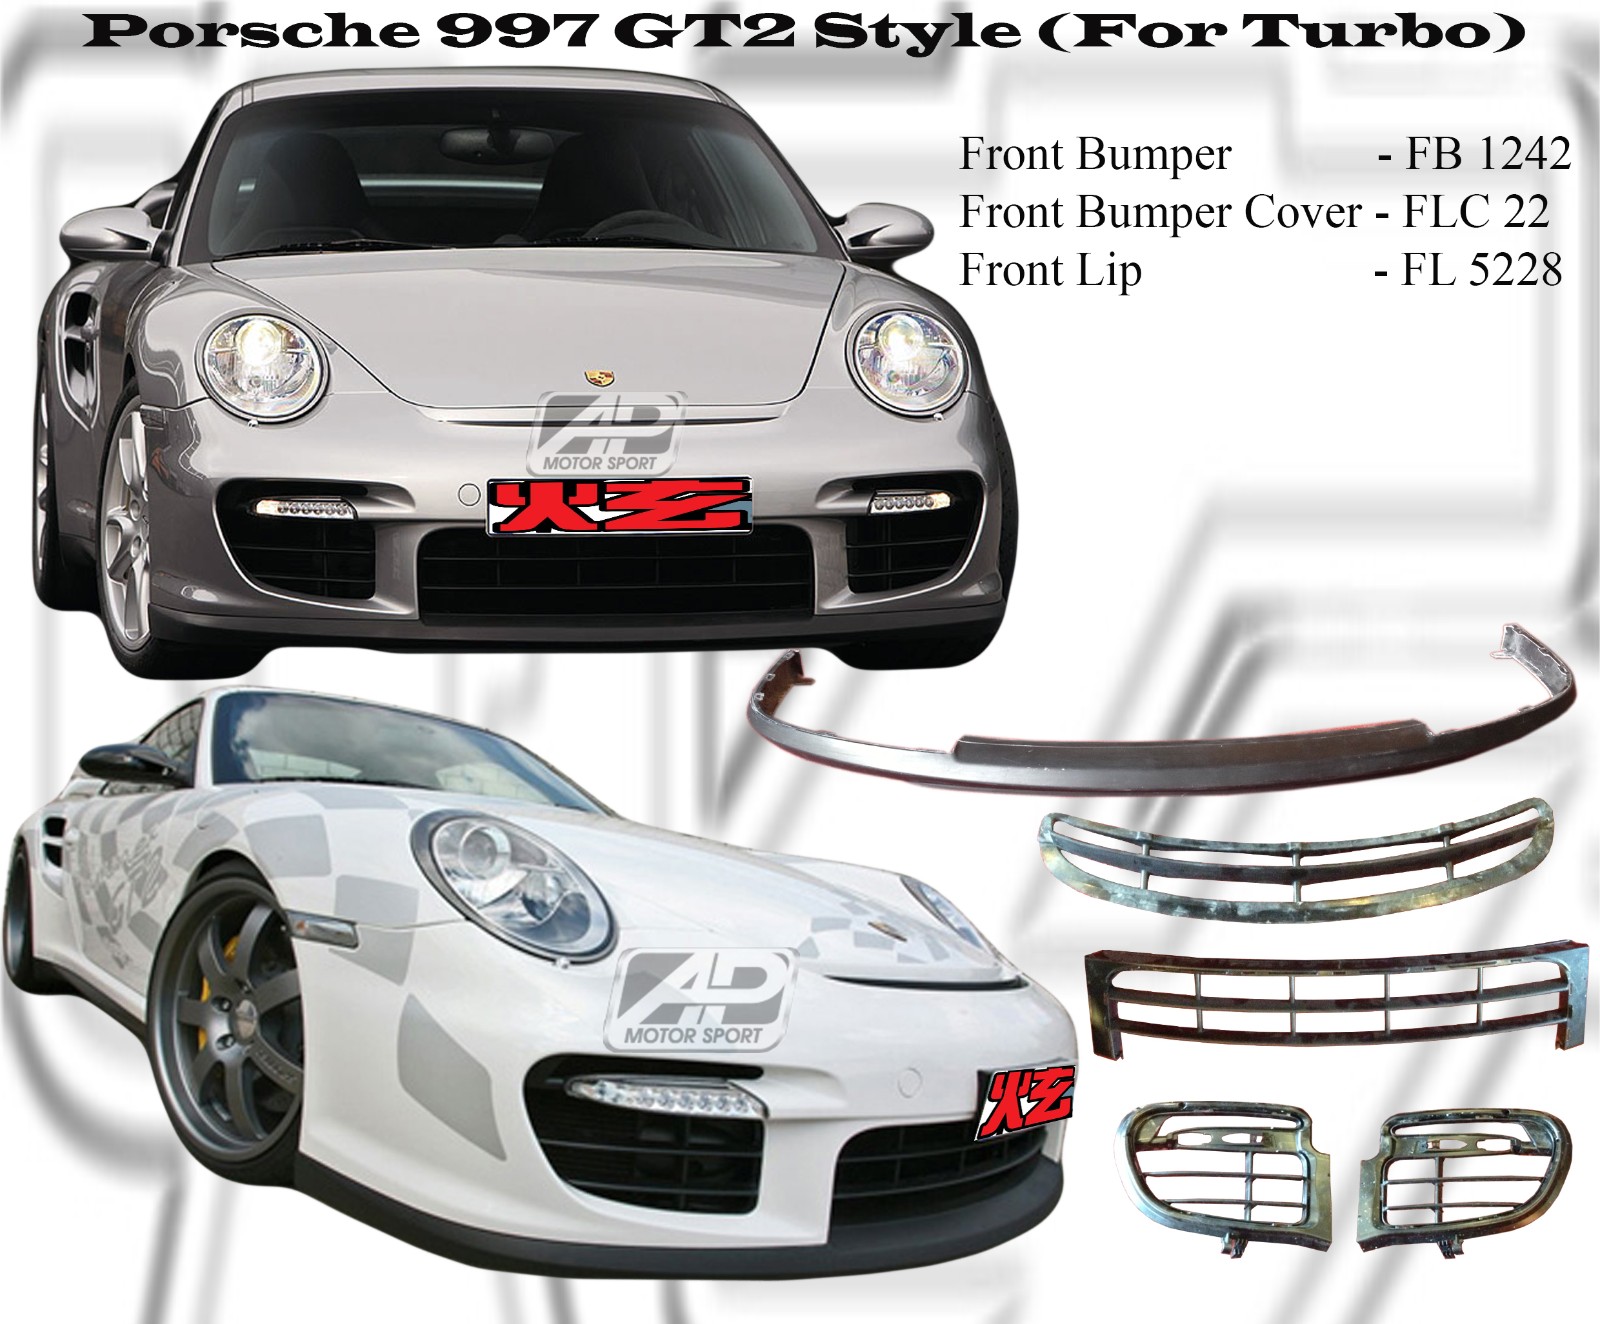 Porsche Carrera 997 GT2 (For Turbo) Front Bumper 